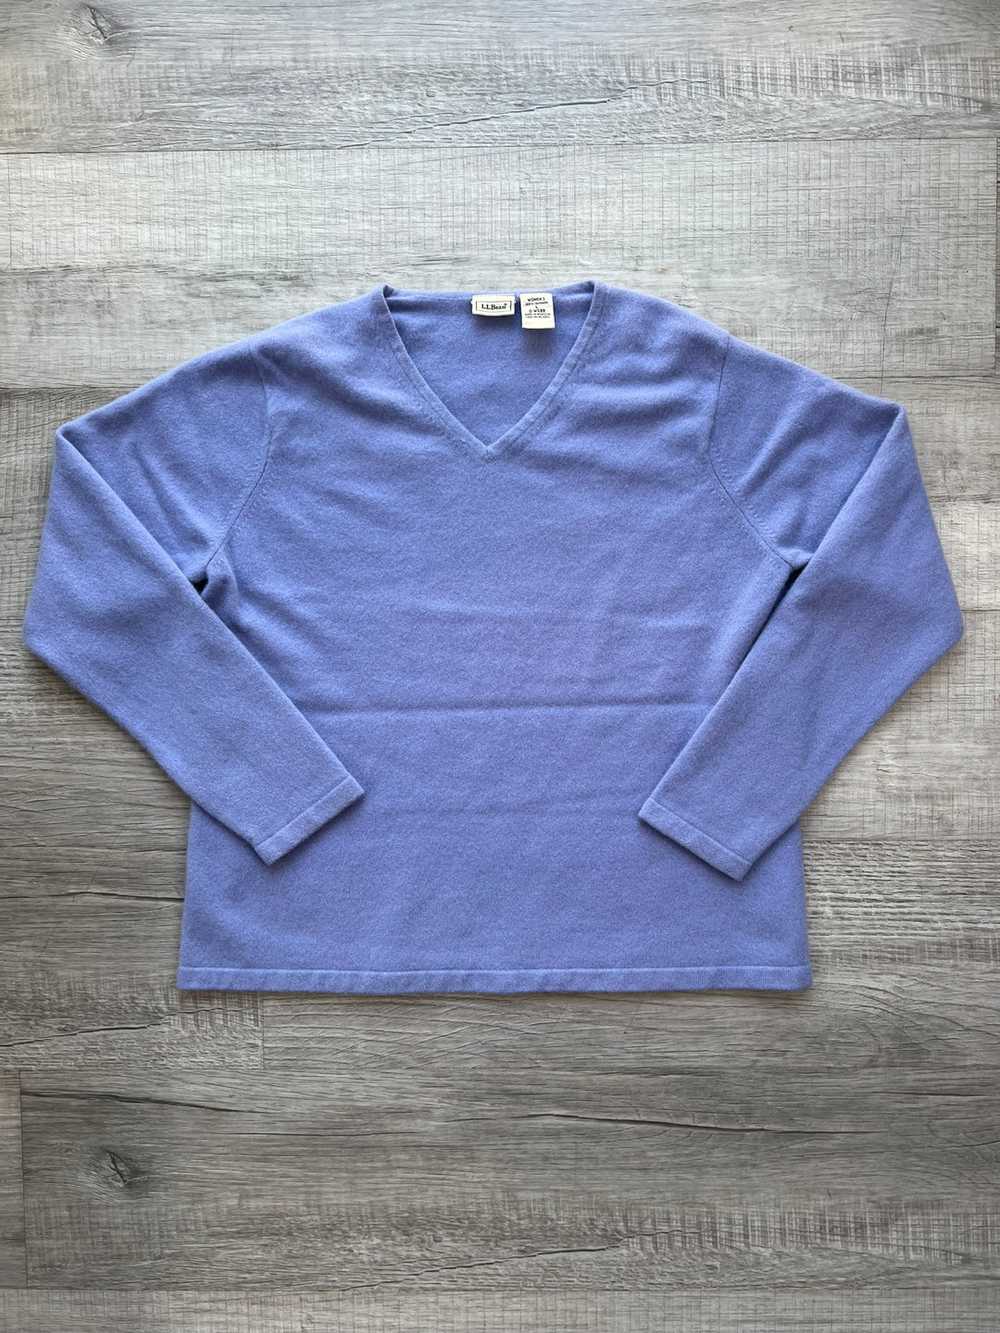 Vintage LL Bean Purple Cashmere V Neck Sweater - image 2